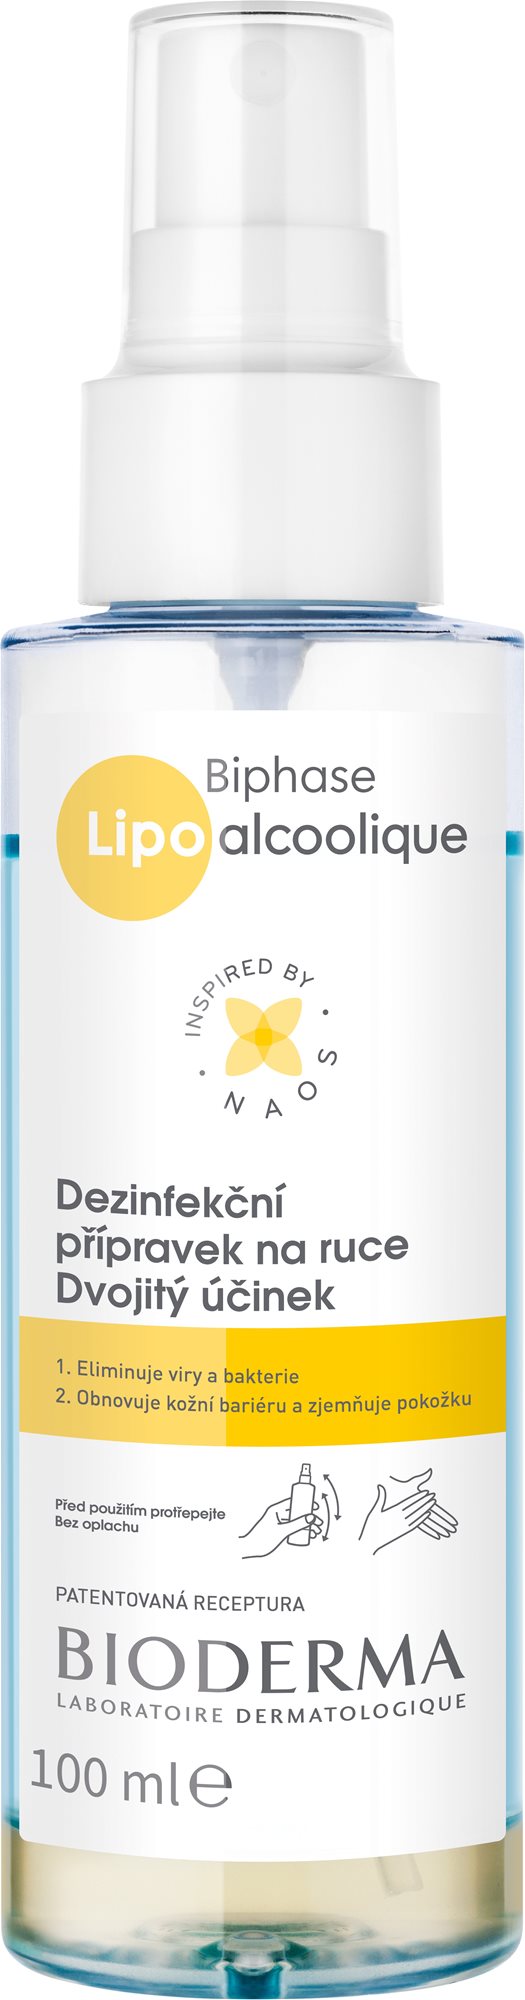 BIODERMA Biphase Lipo alcoolique 100 ml